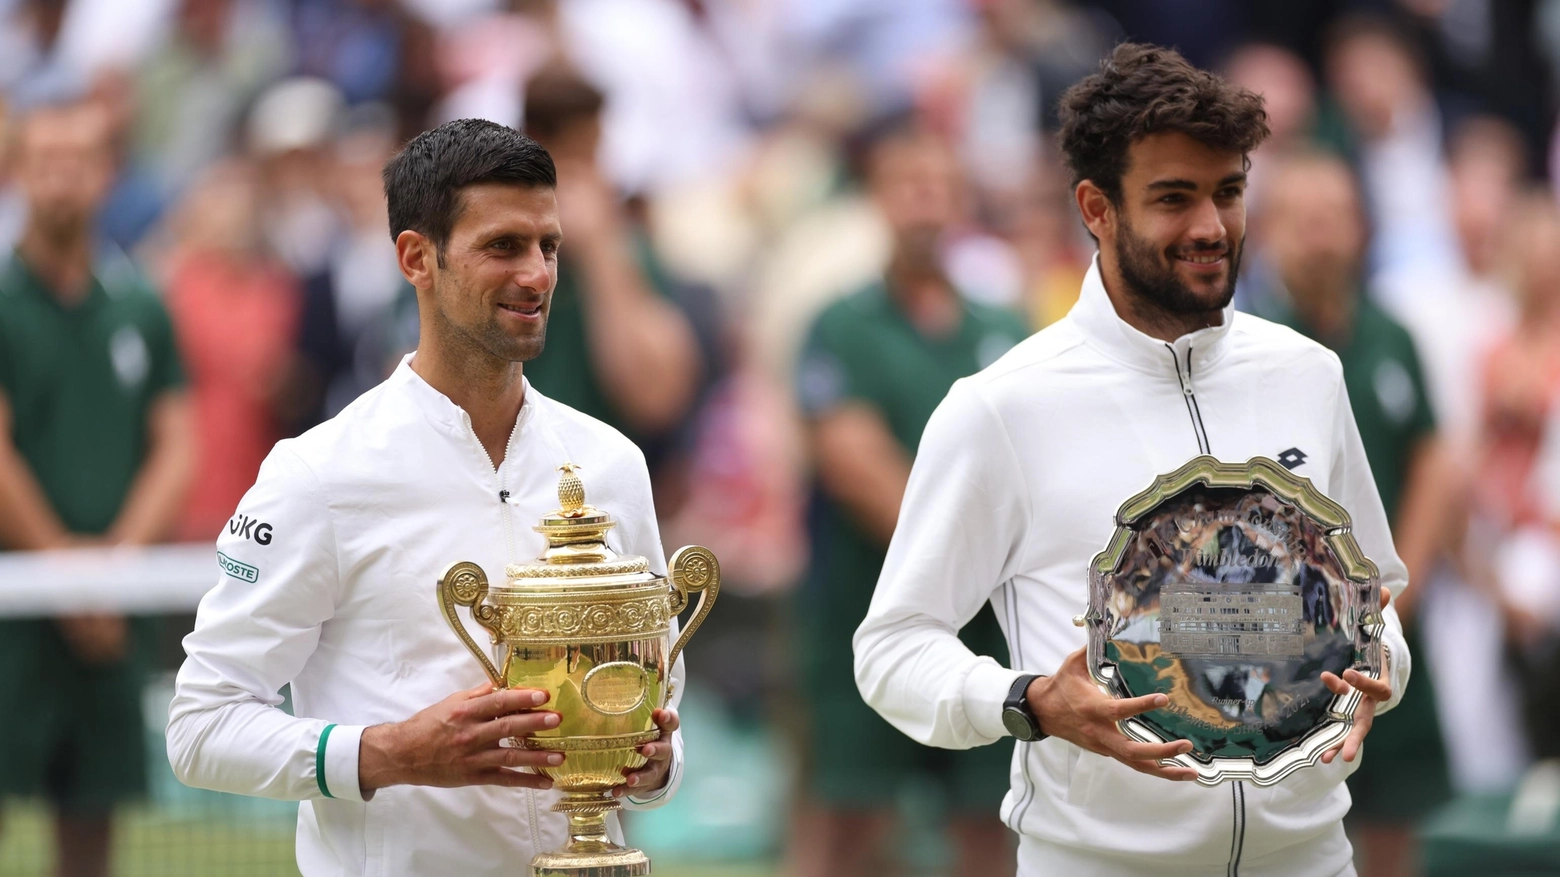 La finale di Wimbledon persa da Berrettini contro Novak Djokovic